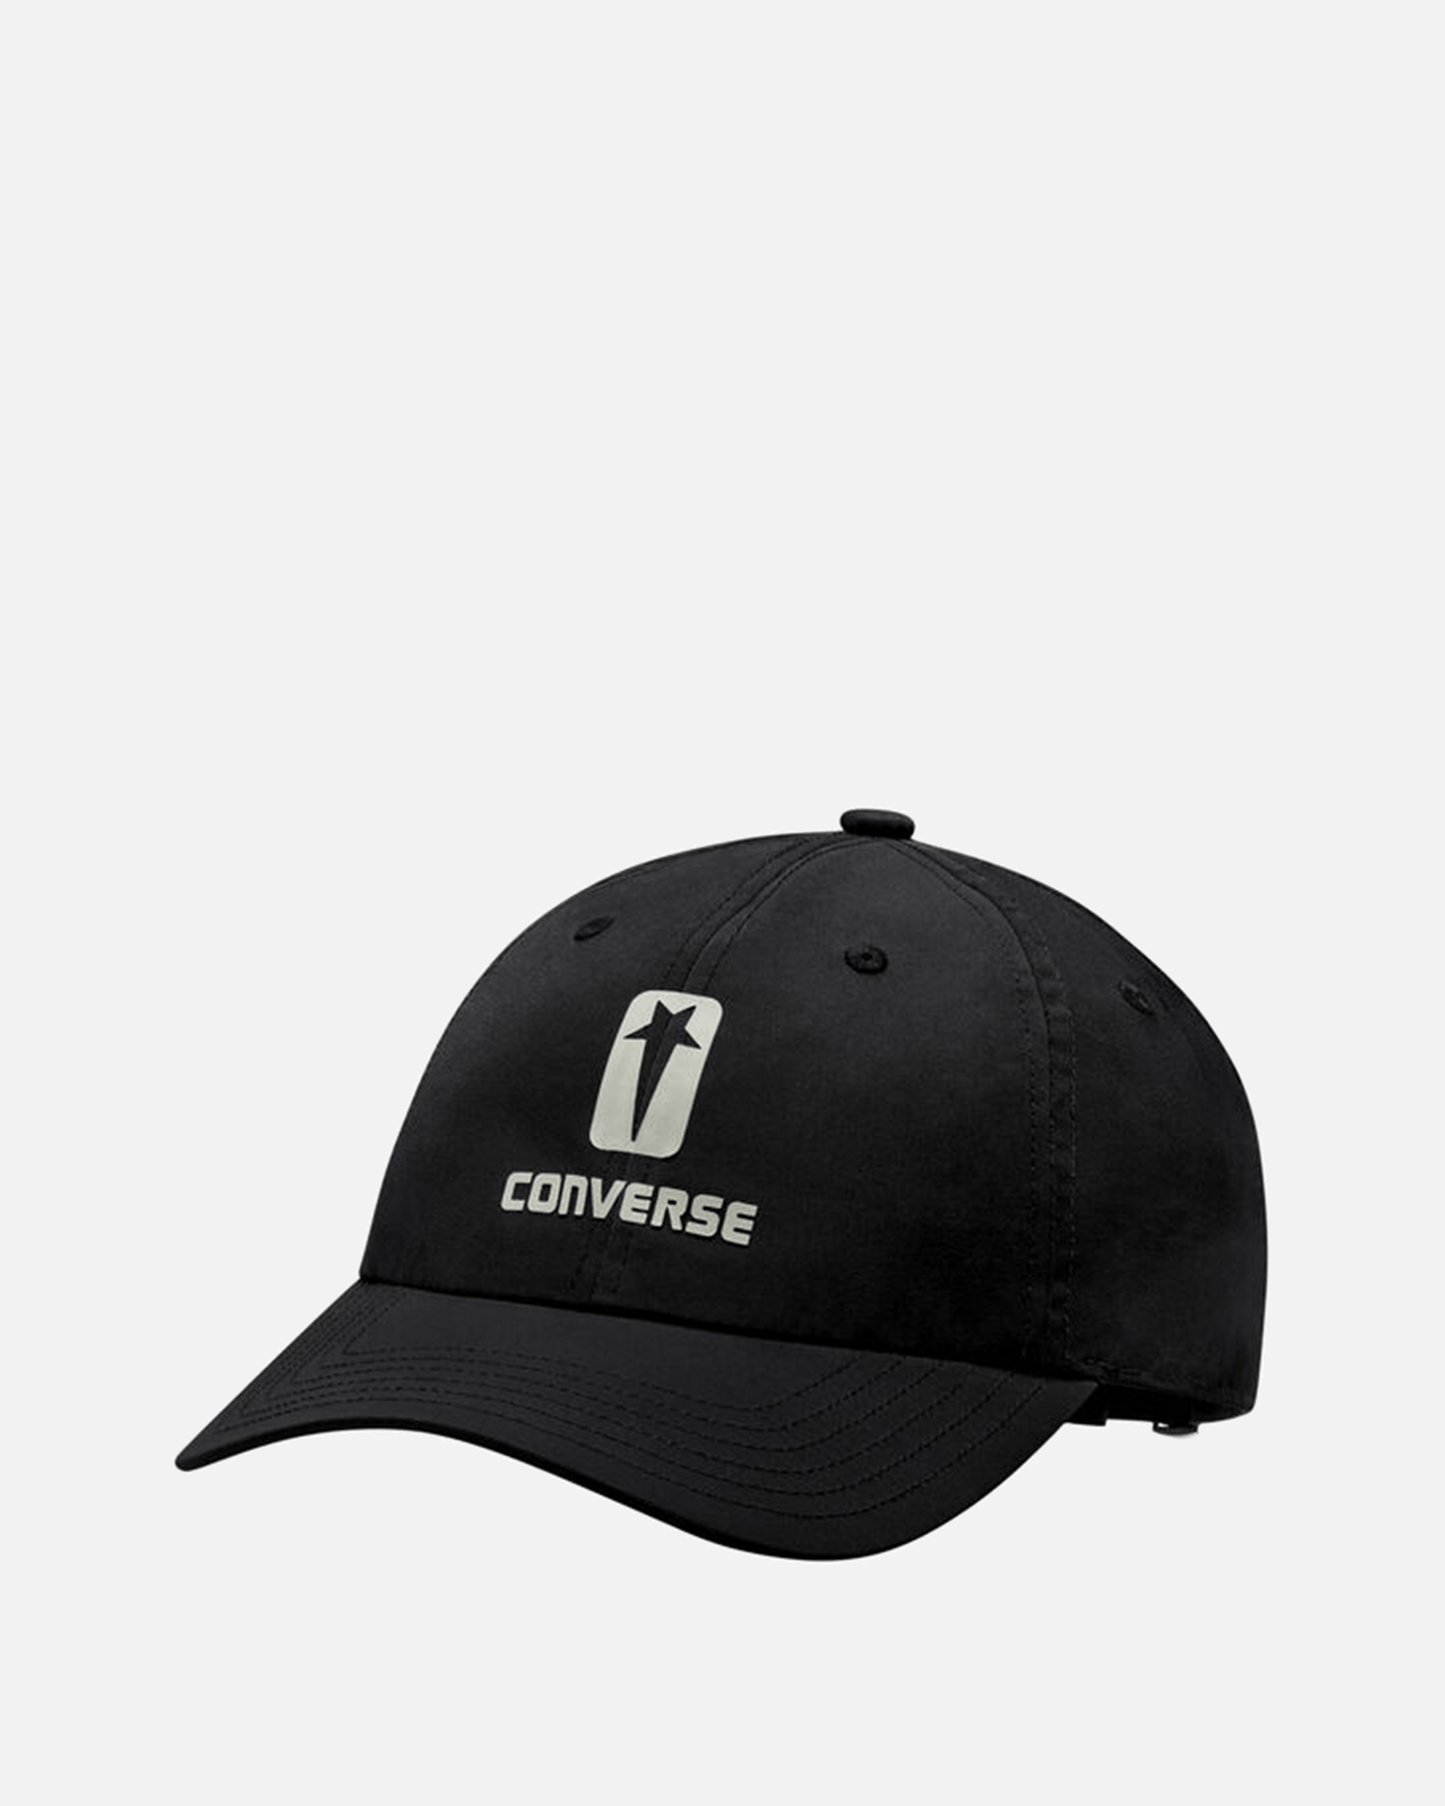 Rick Owens DRKSHDW Men's Hats Converse Cap in Black/Pearl